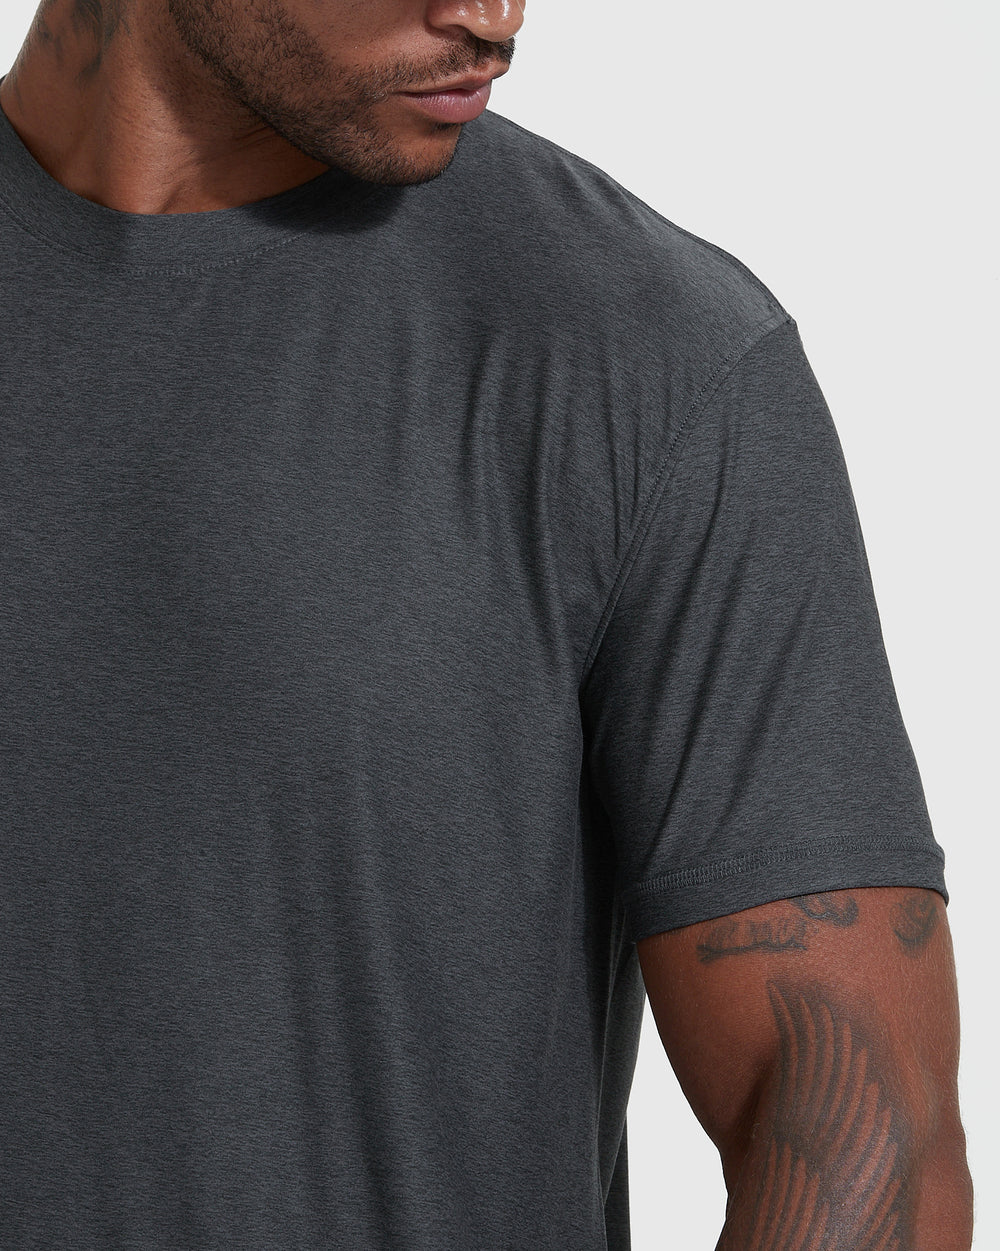 Men's Short Sleeve Active Cotton Crew T-Shirt, Black and Gray 8